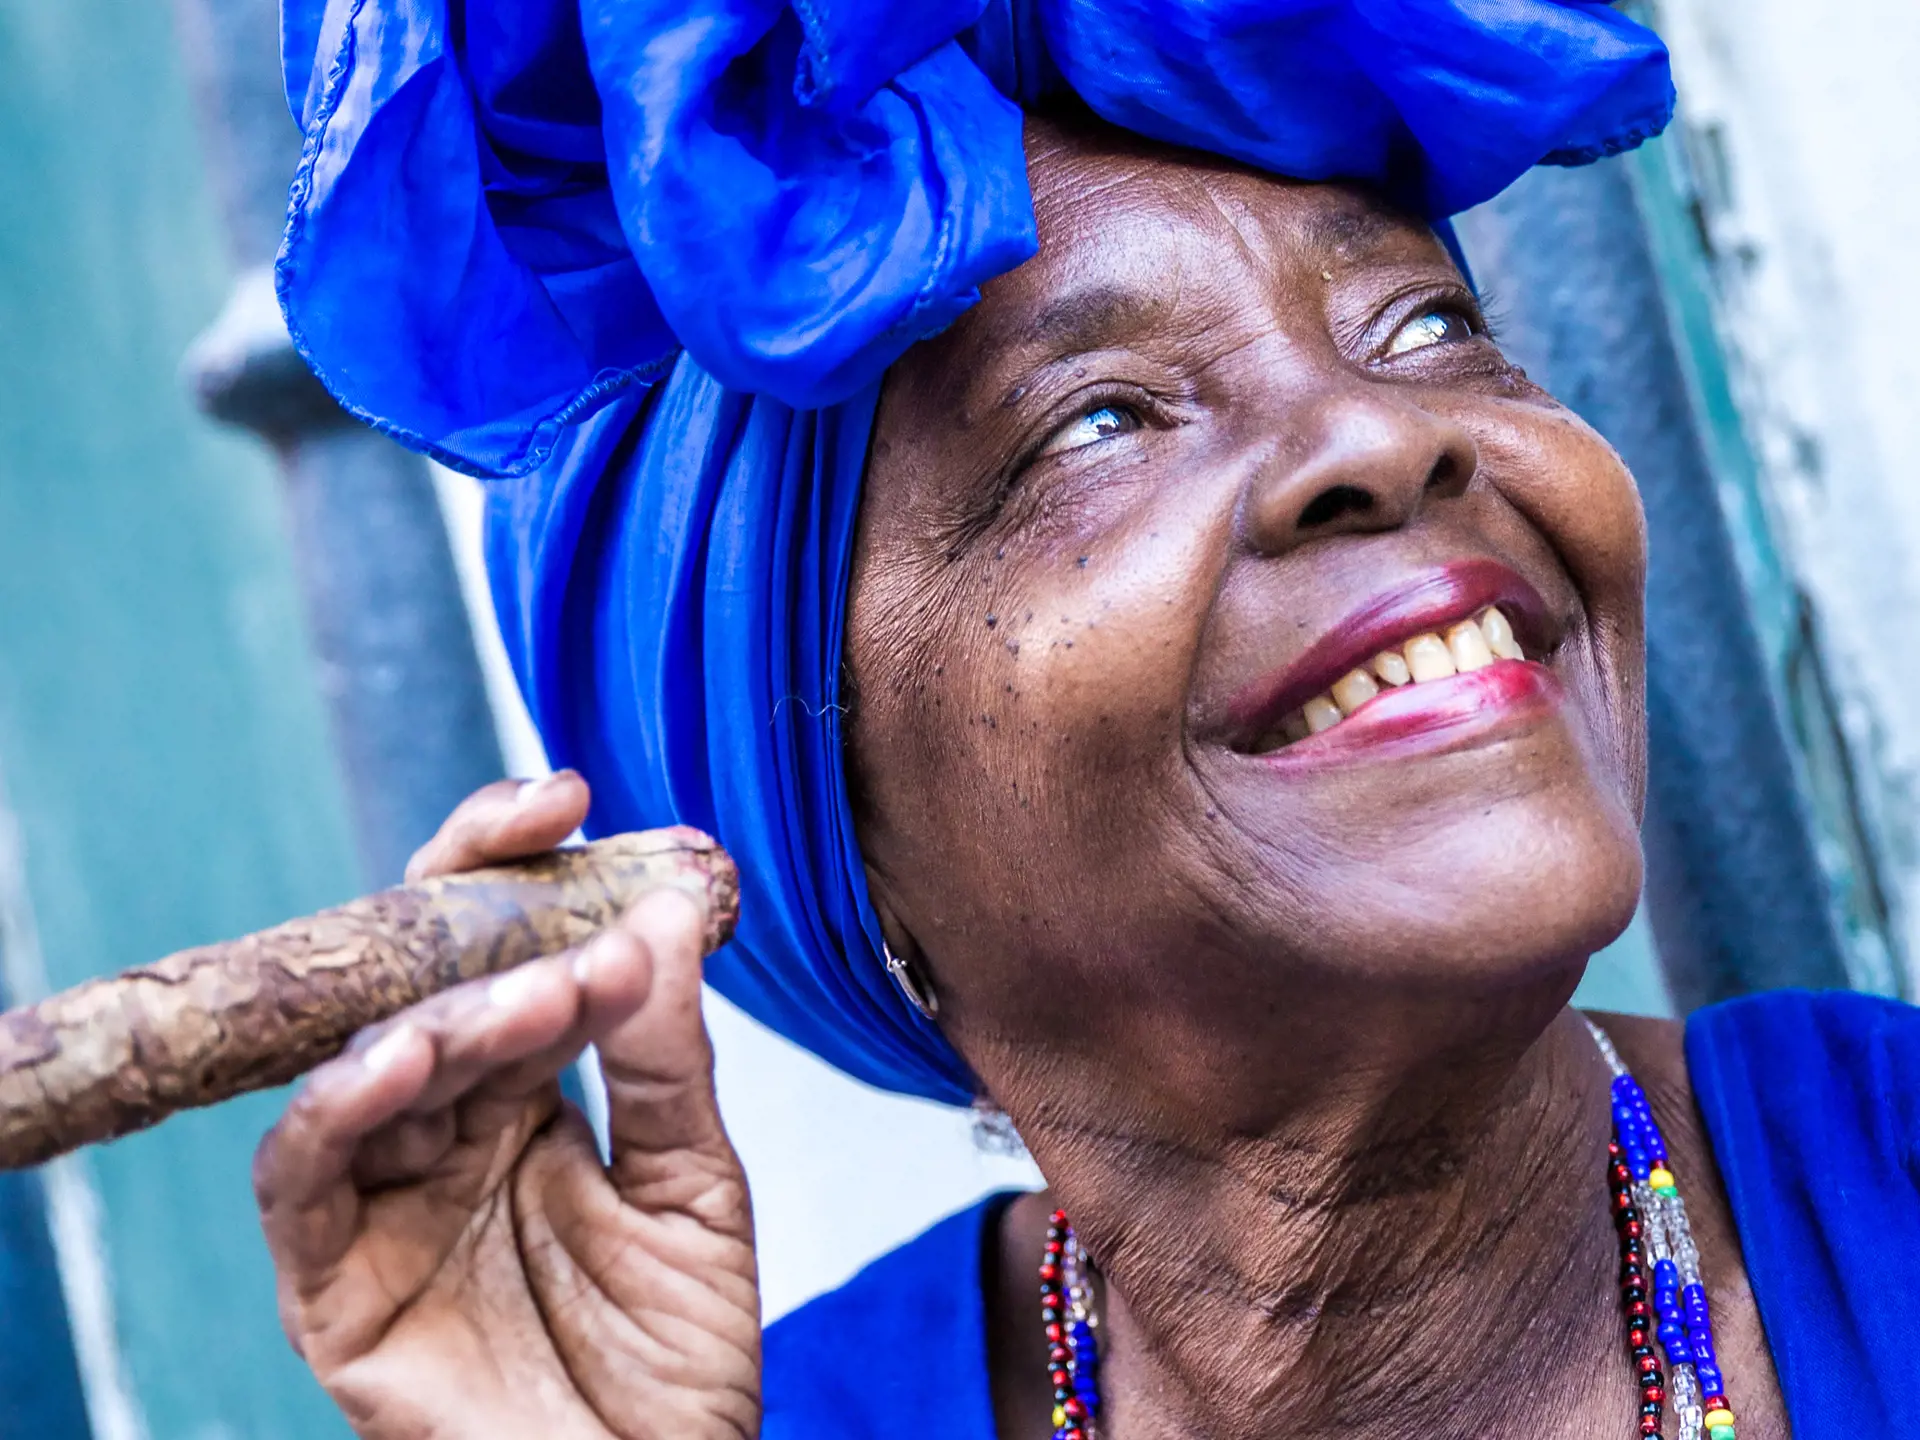 Cubansk kvinde ryger en cigar i Havanna